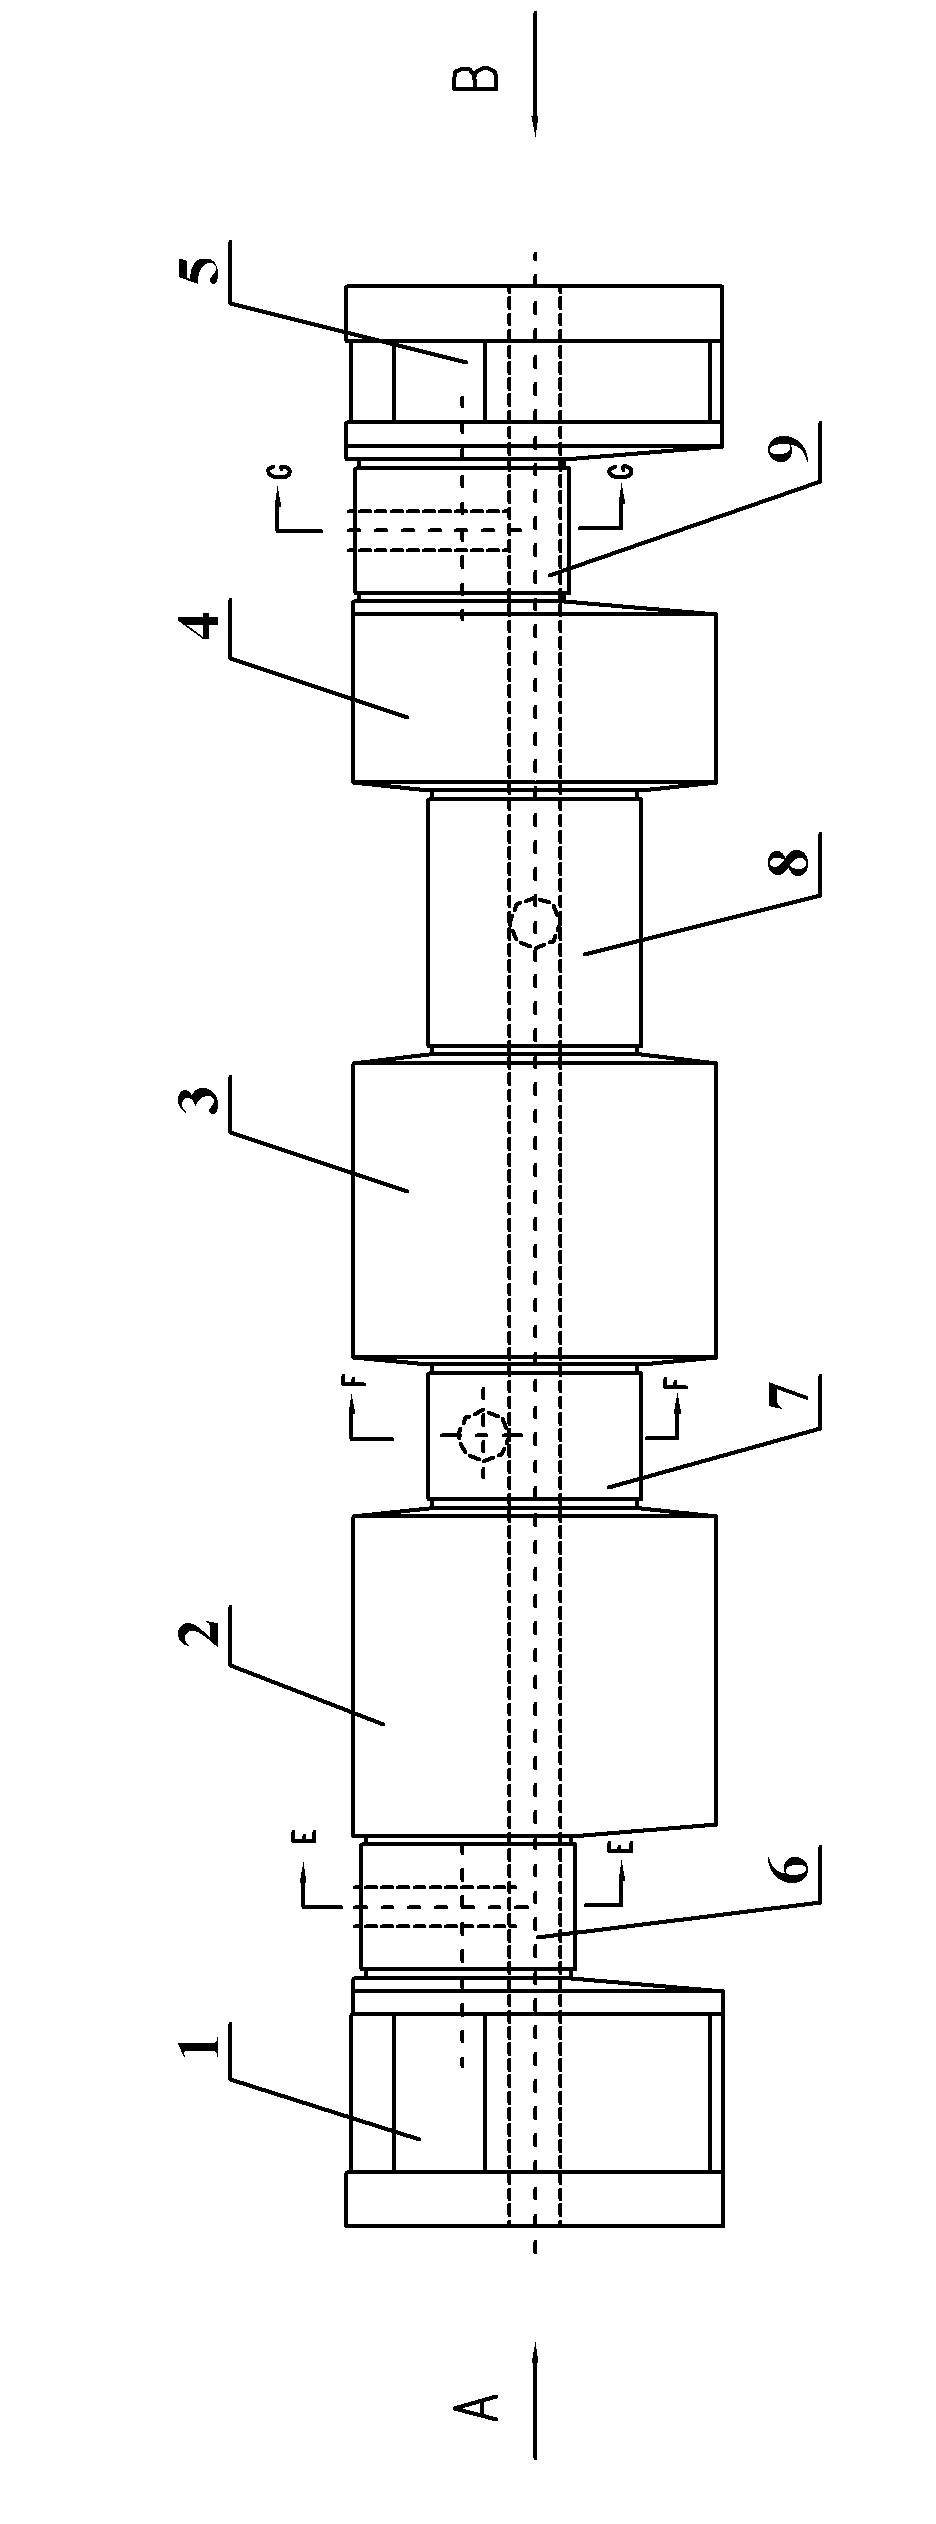 Method for processing crankshaft of multiaxial warp knitting machine